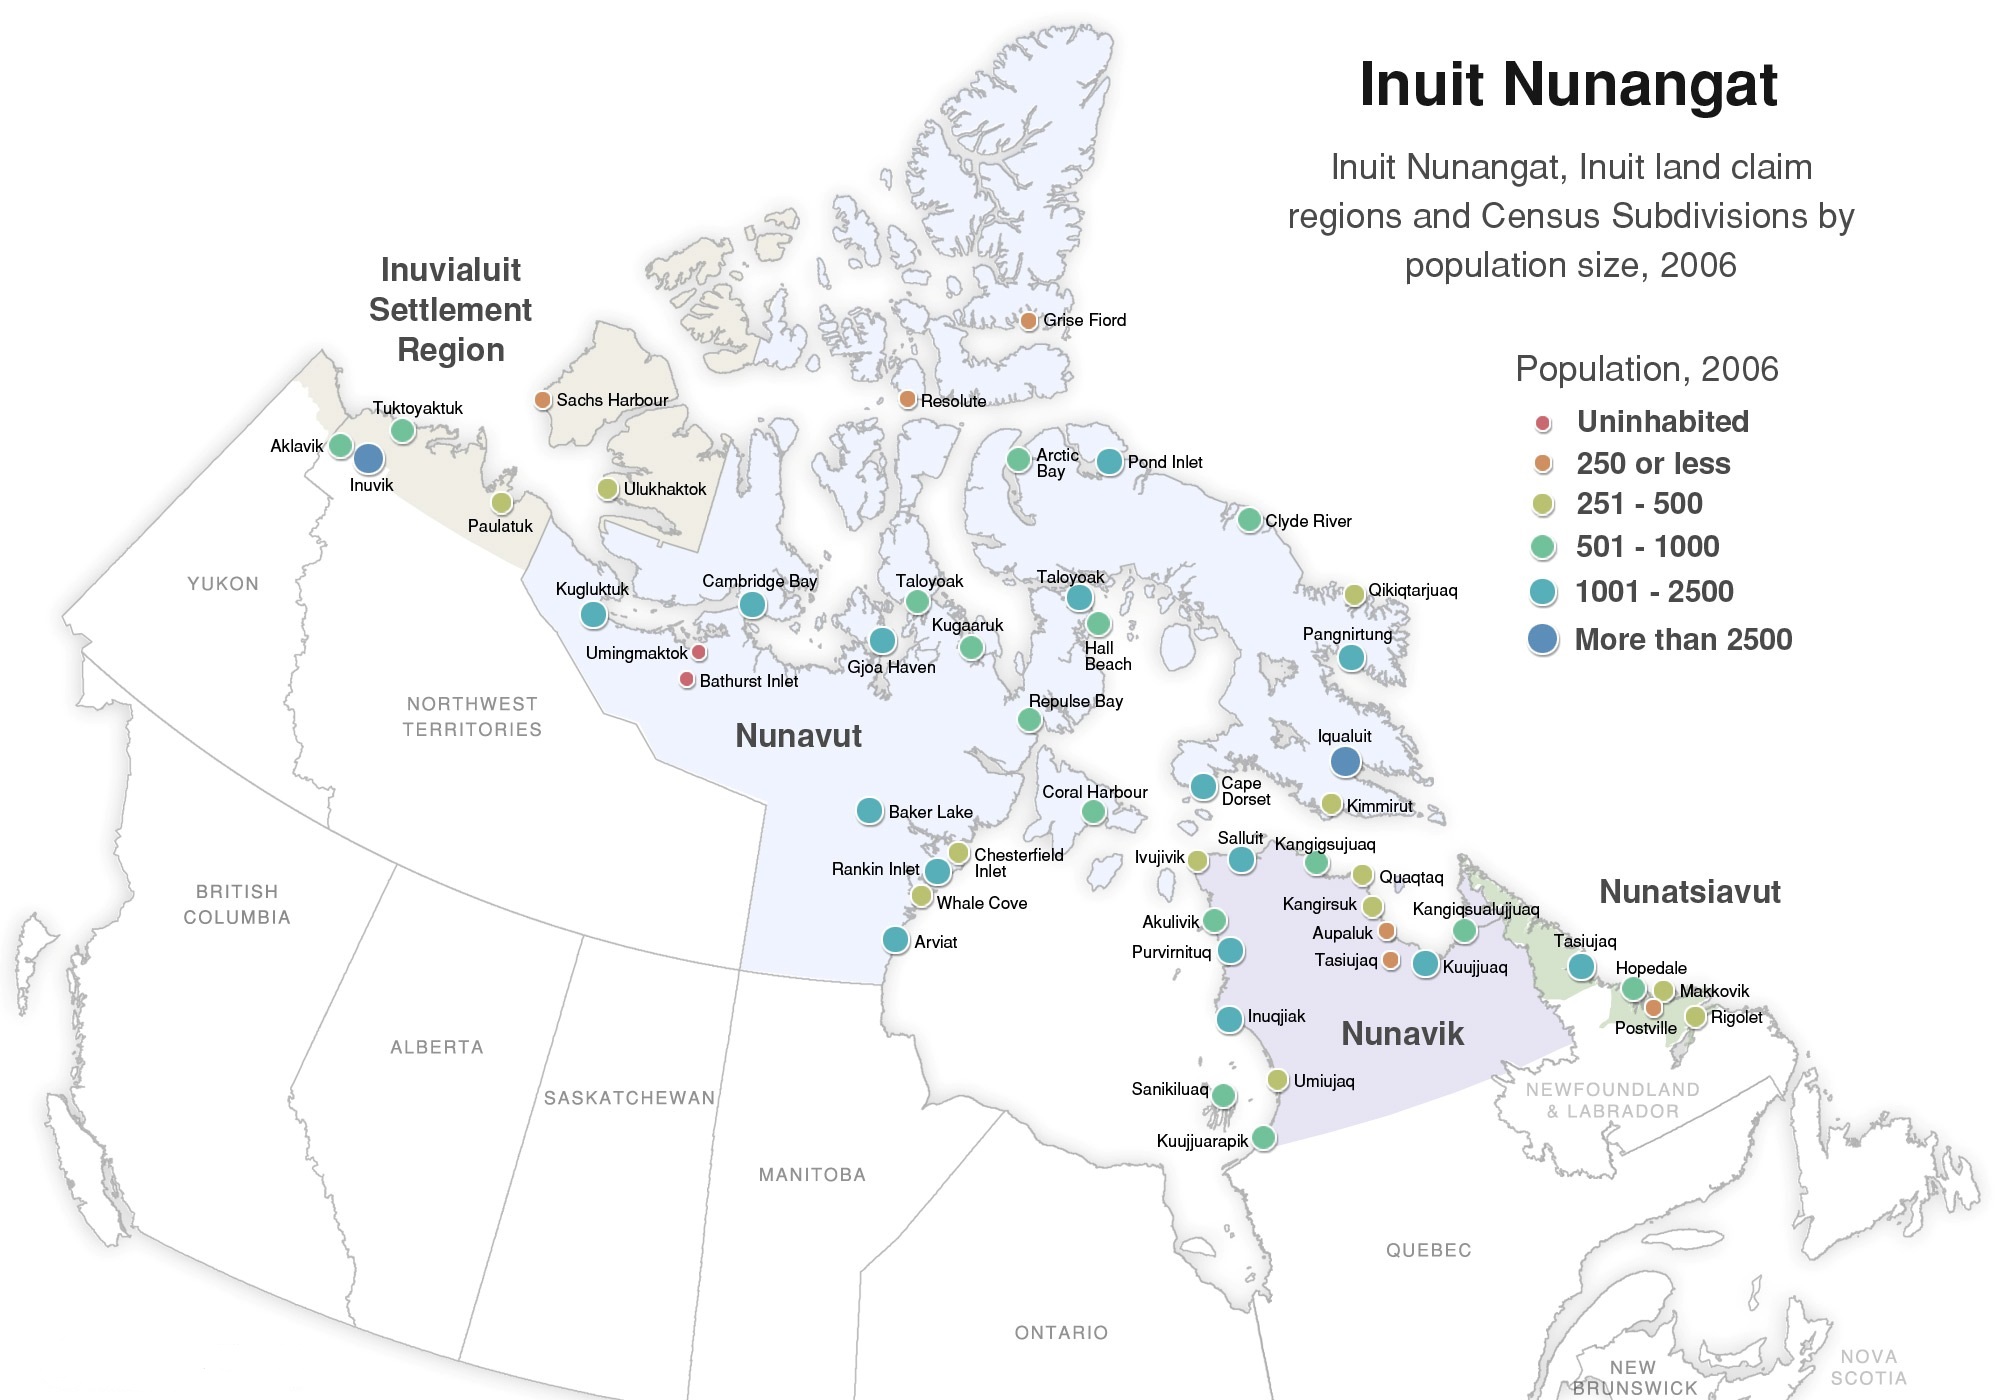 Map of Inuit Nunangat (Canada's four Inuit regions). Source: http://www.ehatlas.ca/remote-communities/inuit-nunangat